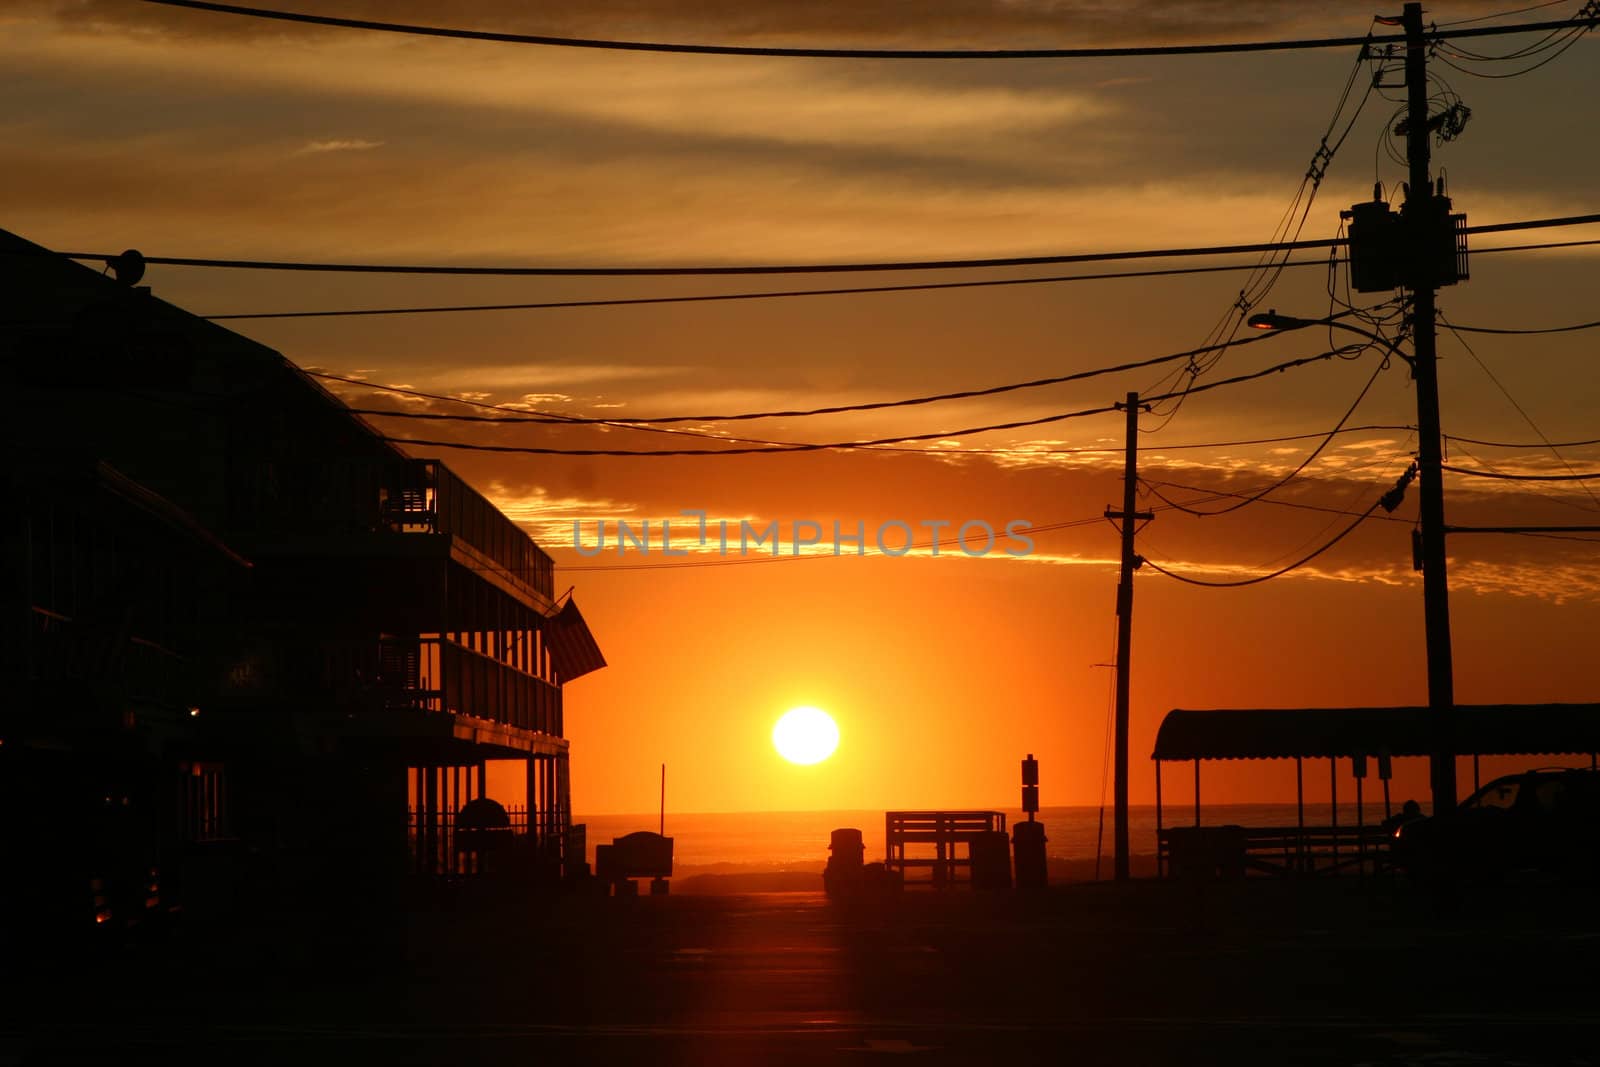 A sunrise / sunset scene at a Maine beach town.